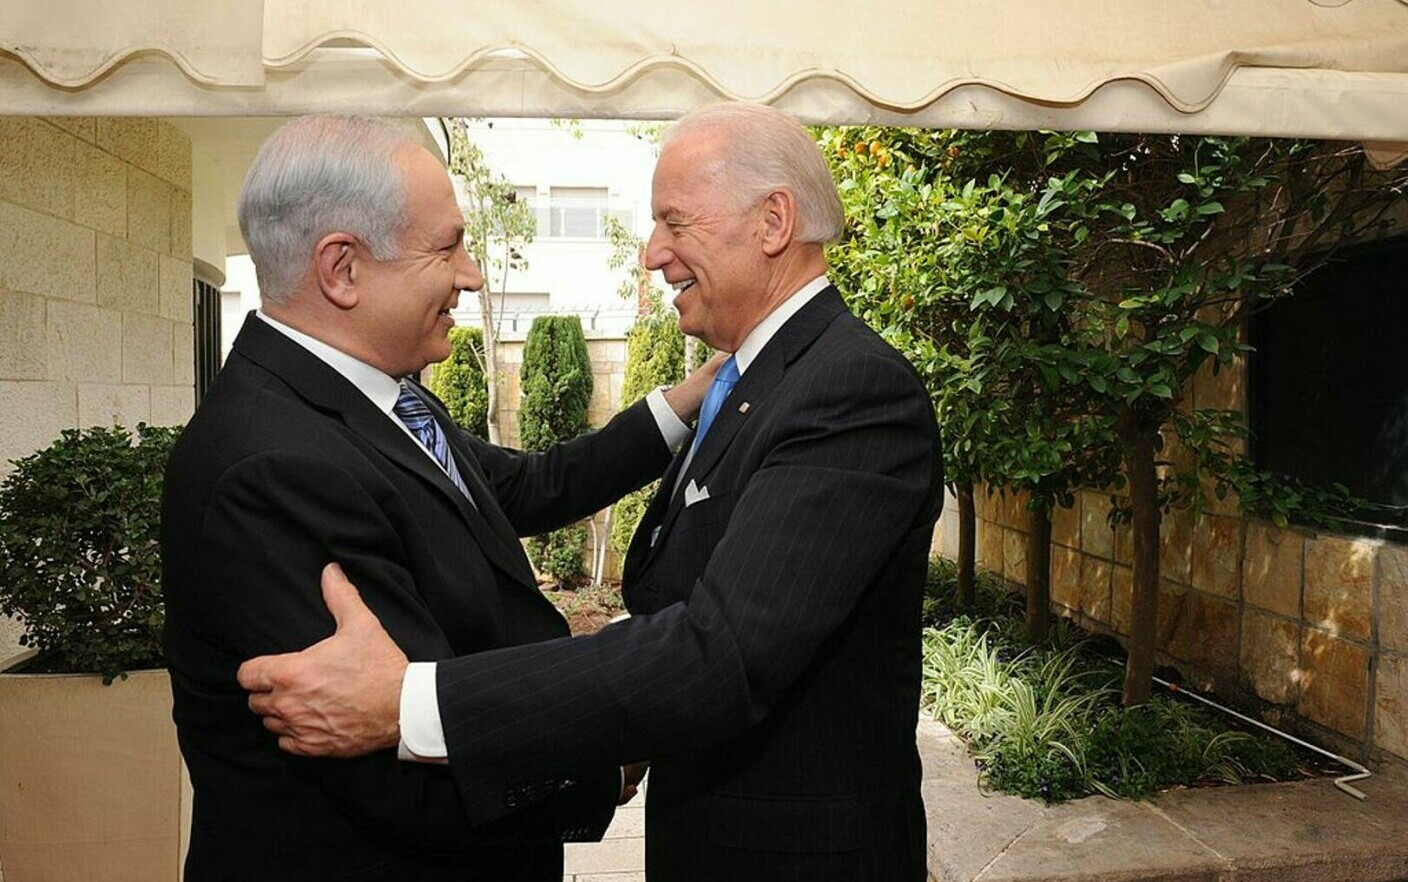 Joe Biden, Benjamin Netanyahu